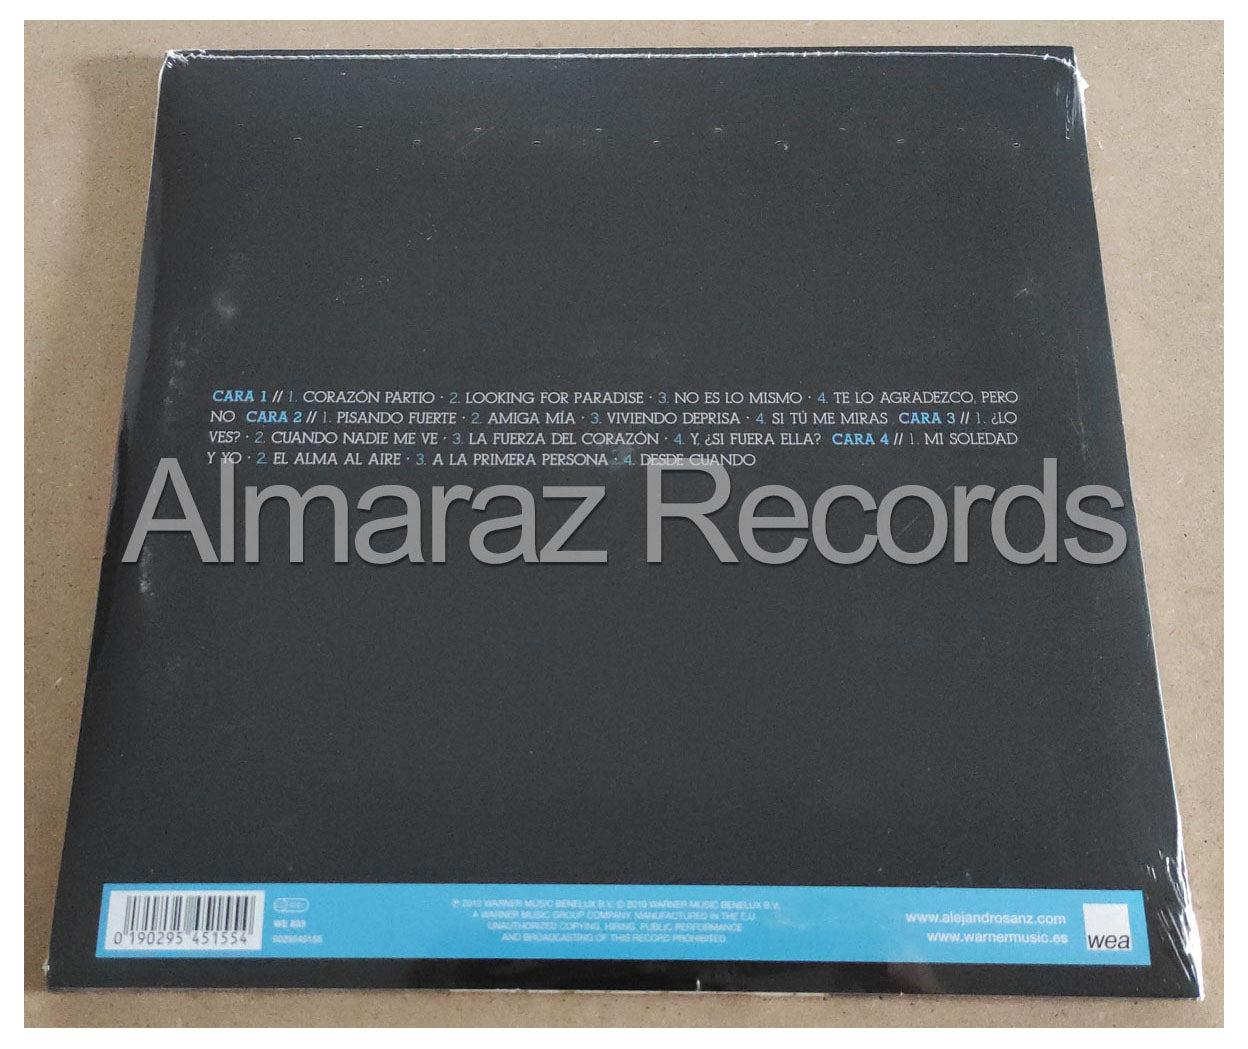 Alejandro Sanz Coleccion Definitiva Vinyl LP+CD